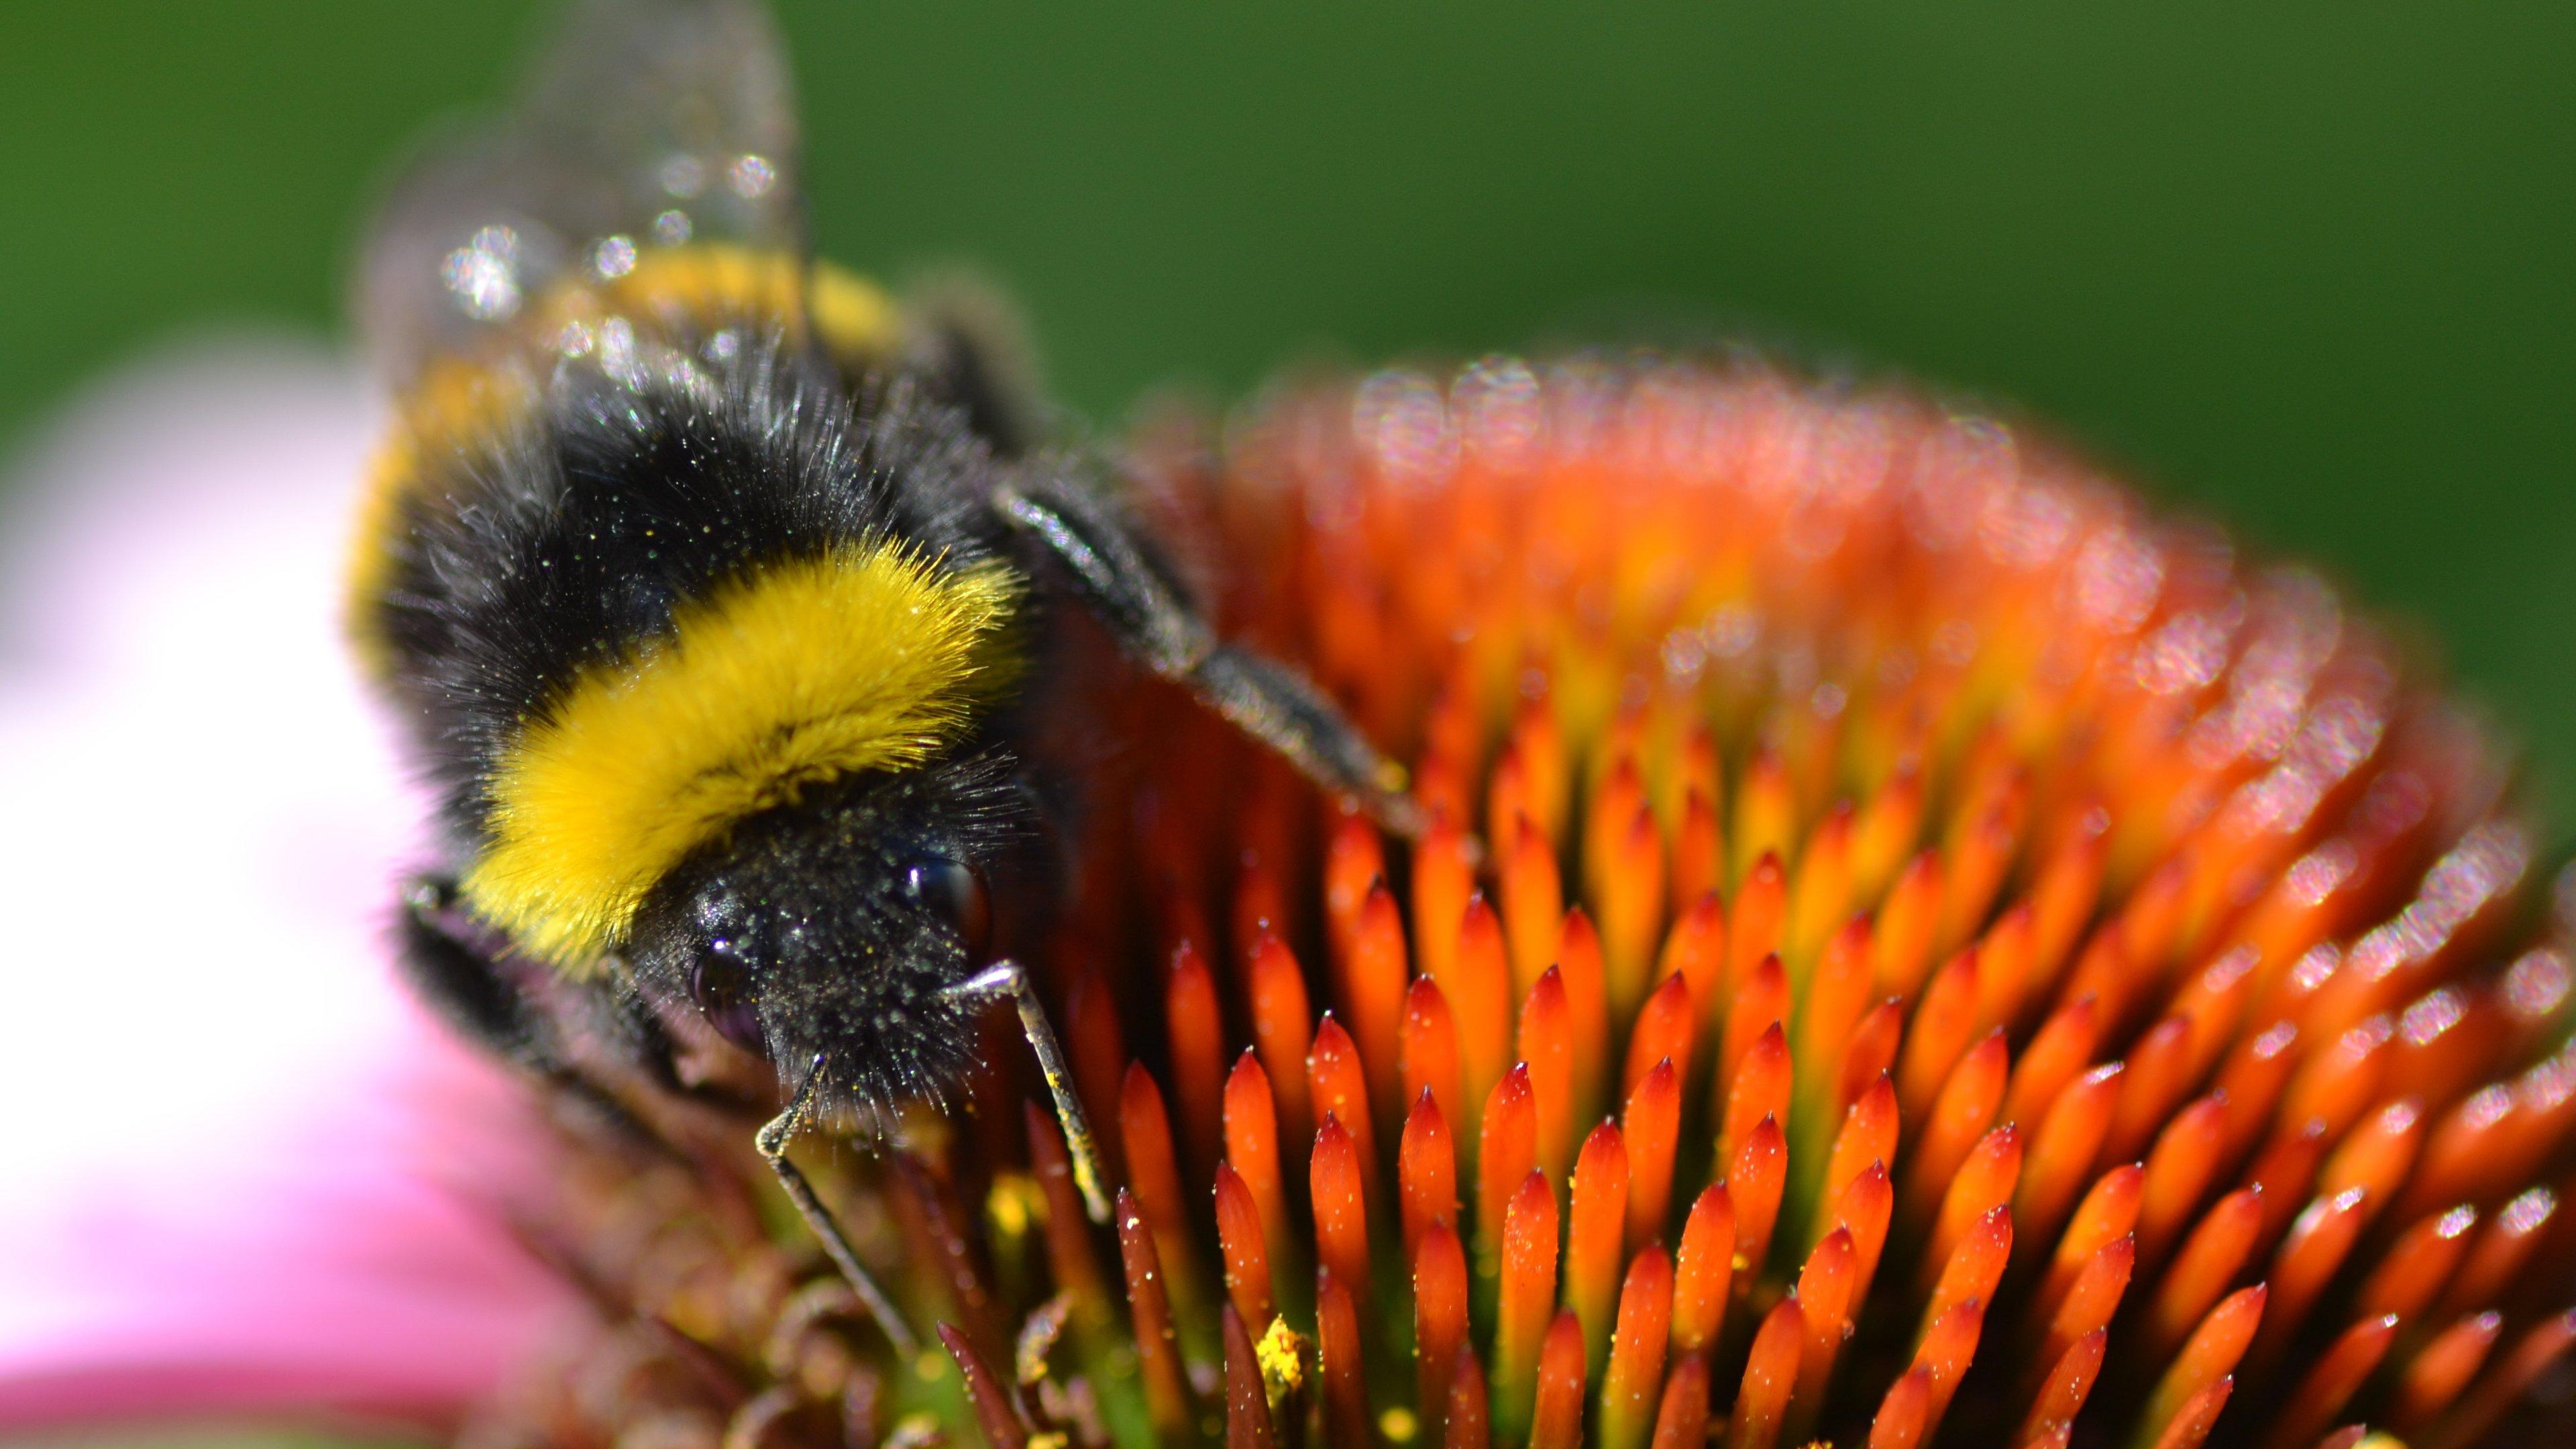 bumblebee 4K wallpaper for your desktop or mobile screen